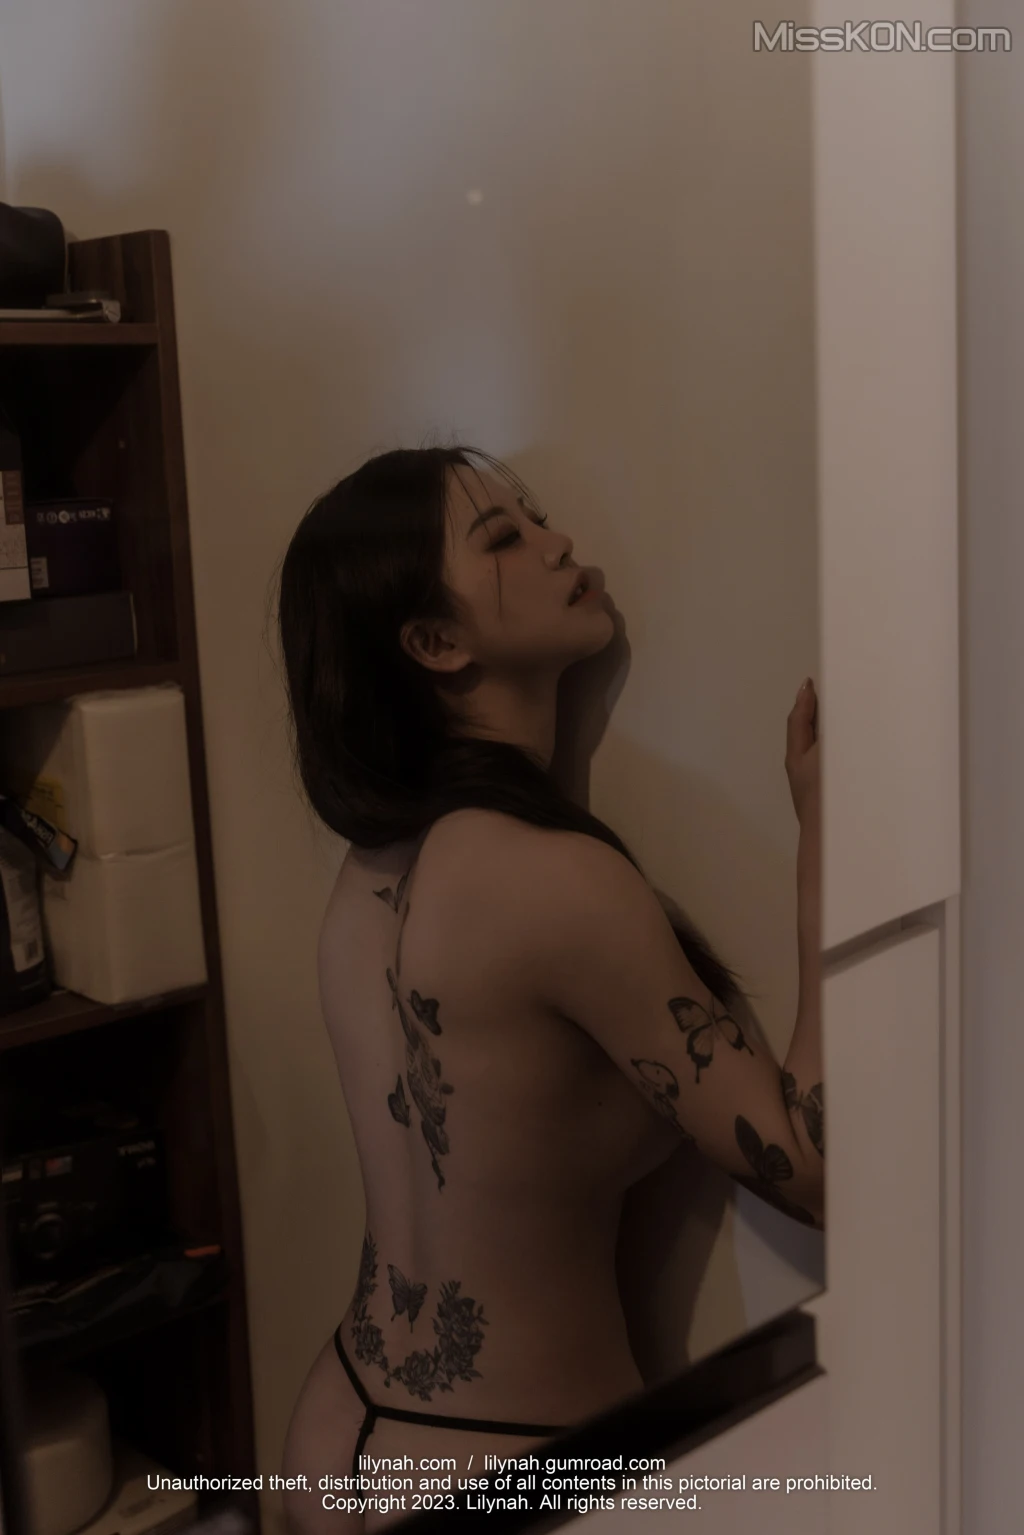 [Lilynah] LW082 Mina (민아): Vol.03 – Marriged Woman Next Door (49 ảnh)